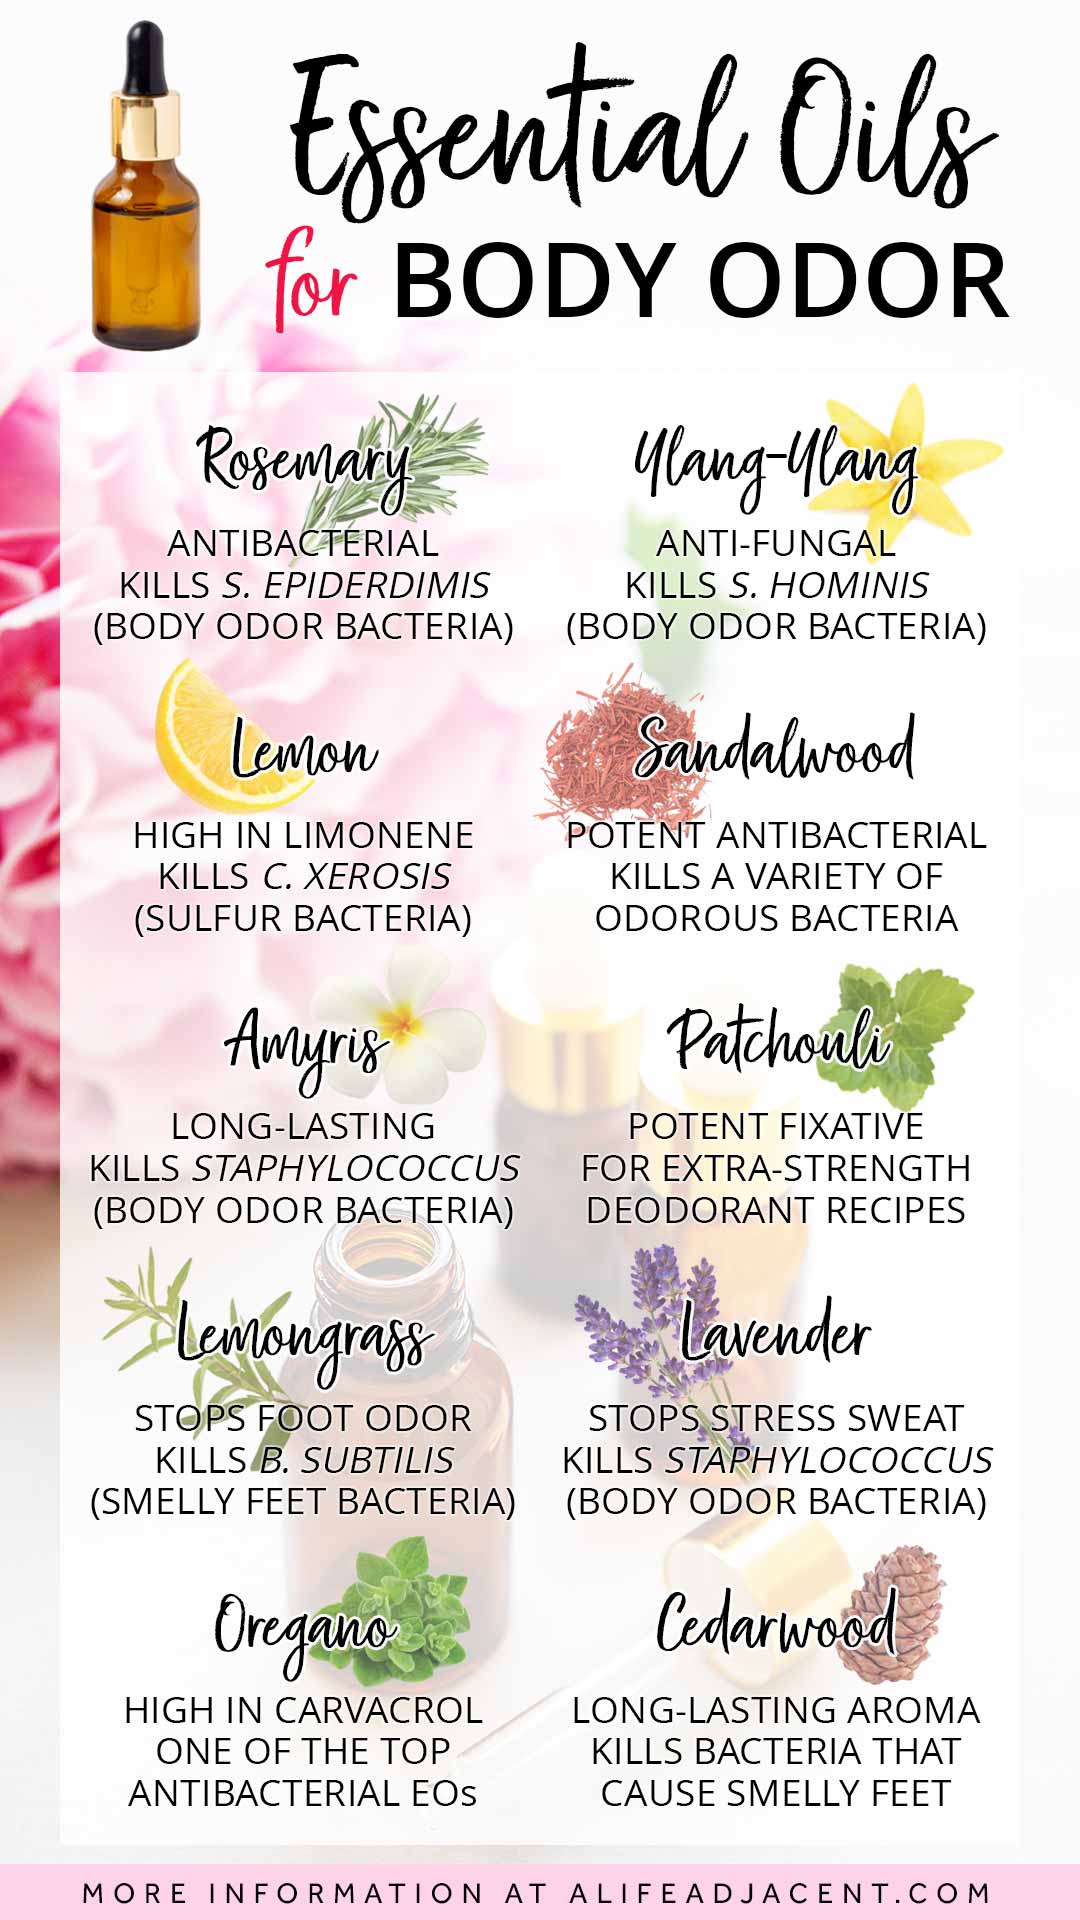 https://alifeadjacent.com/wp-content/uploads/2021/02/essential-oils-for-body-odor-infographic.jpg